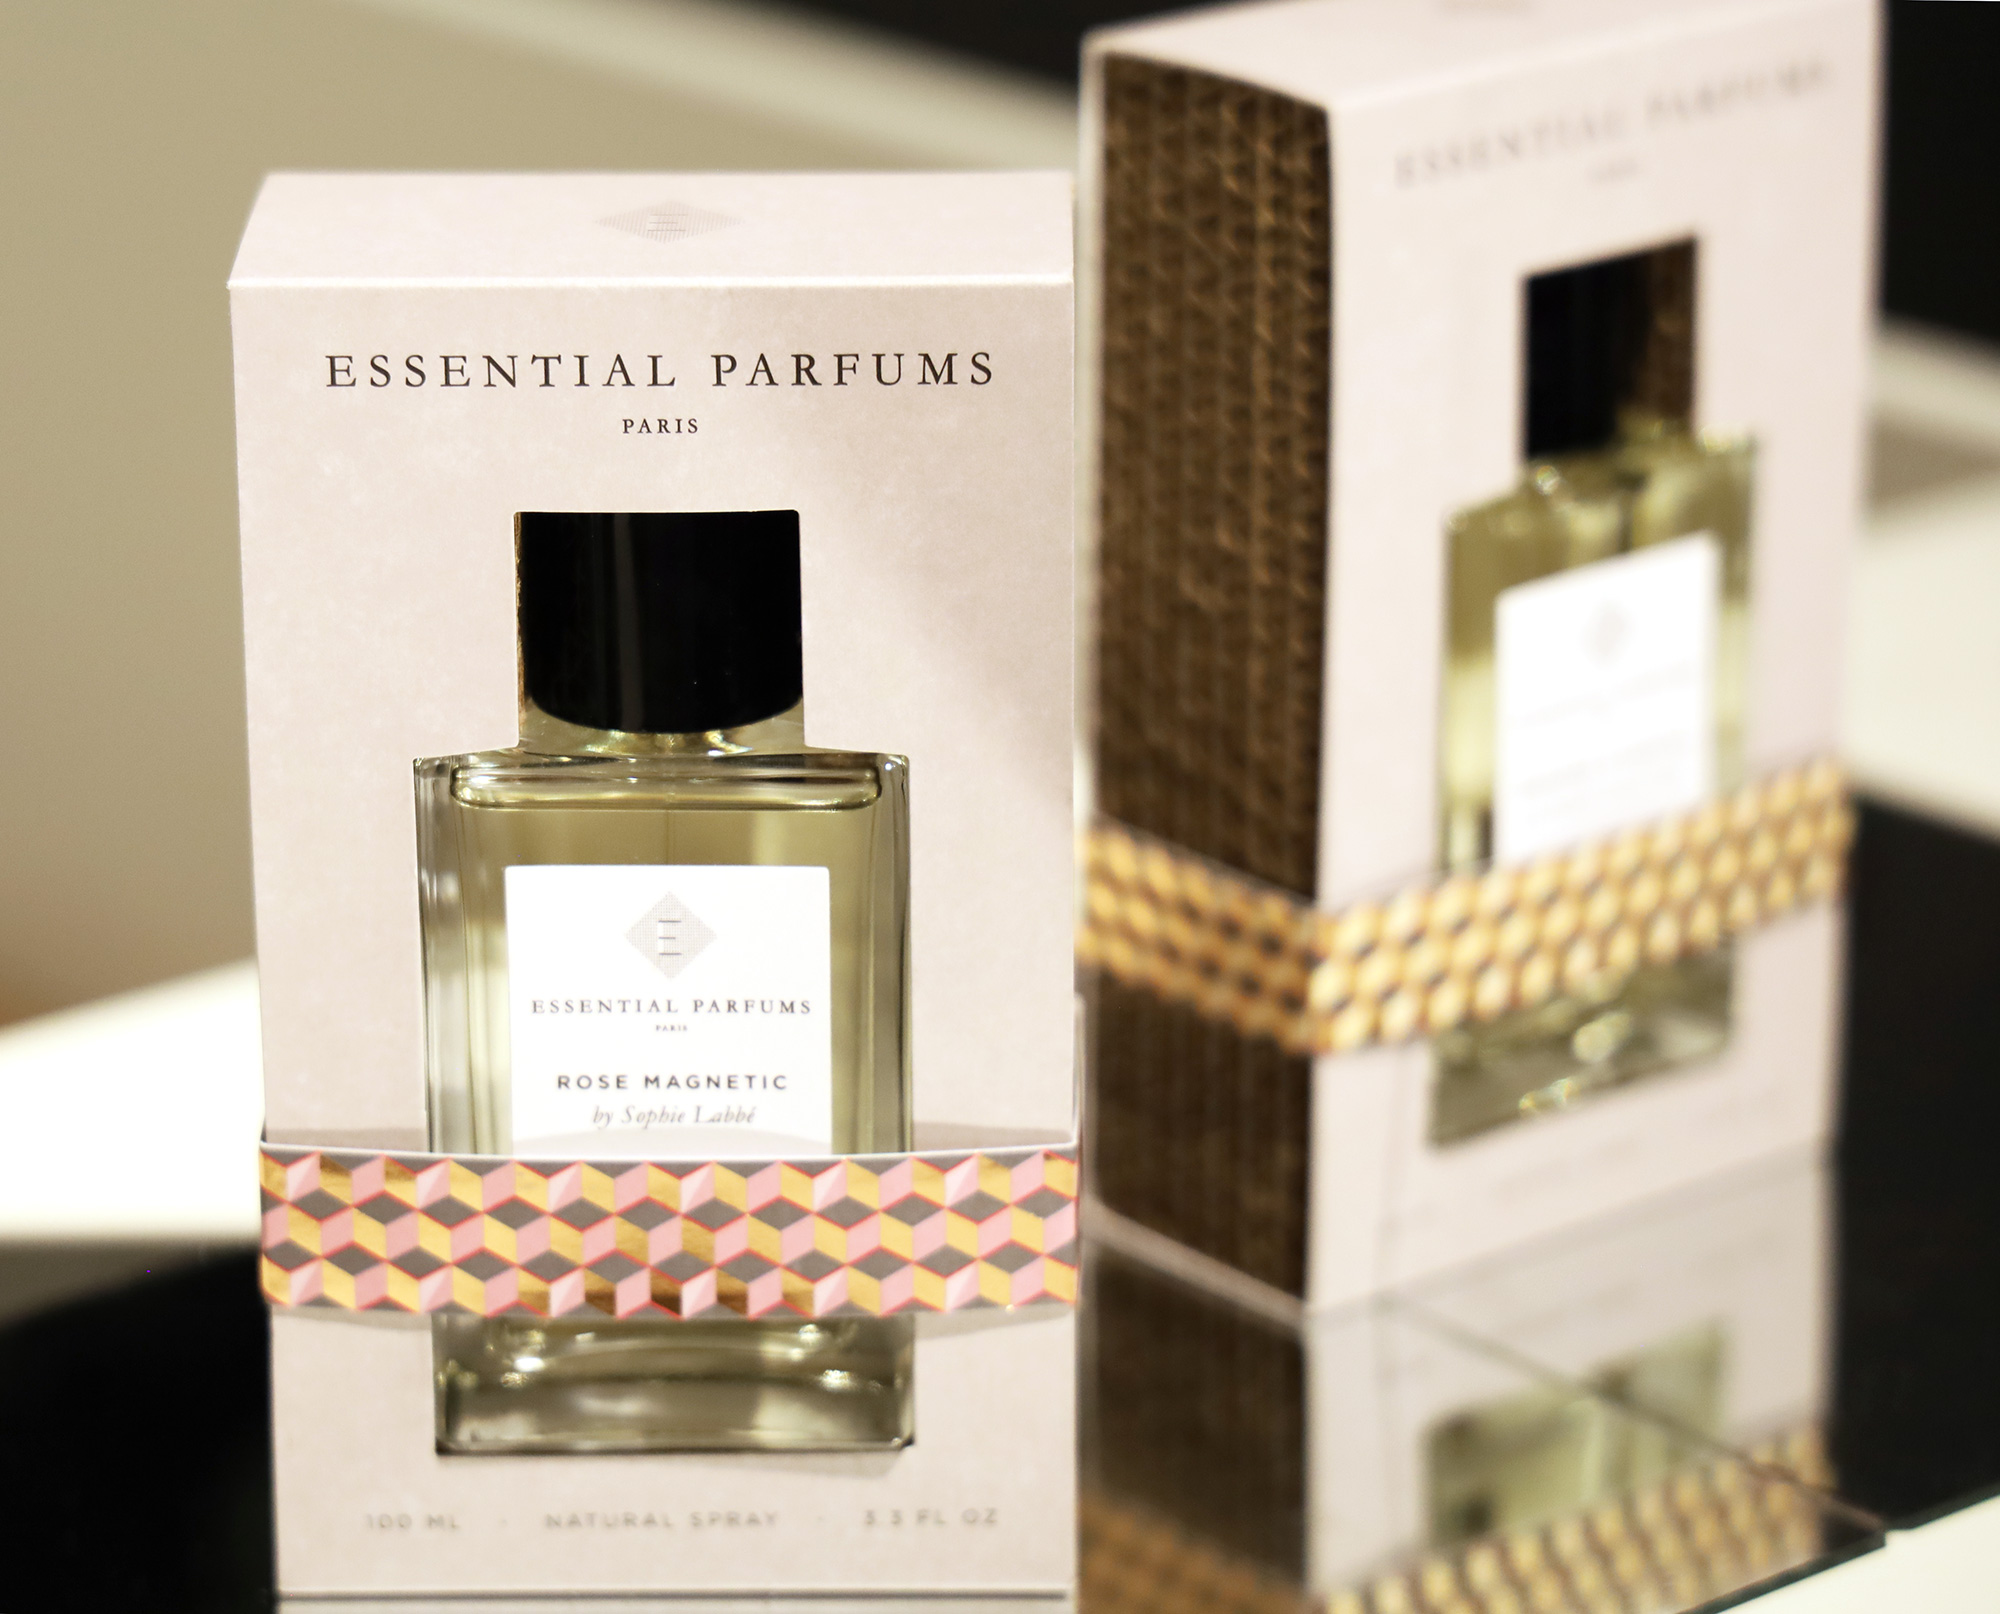 Essential parfums paris bergamote. Essential Parfums Bergamote. Бойс Империал Парфюм. Boise Imperial Essential Parfums. Бойс Империал Парфюм бергамот.